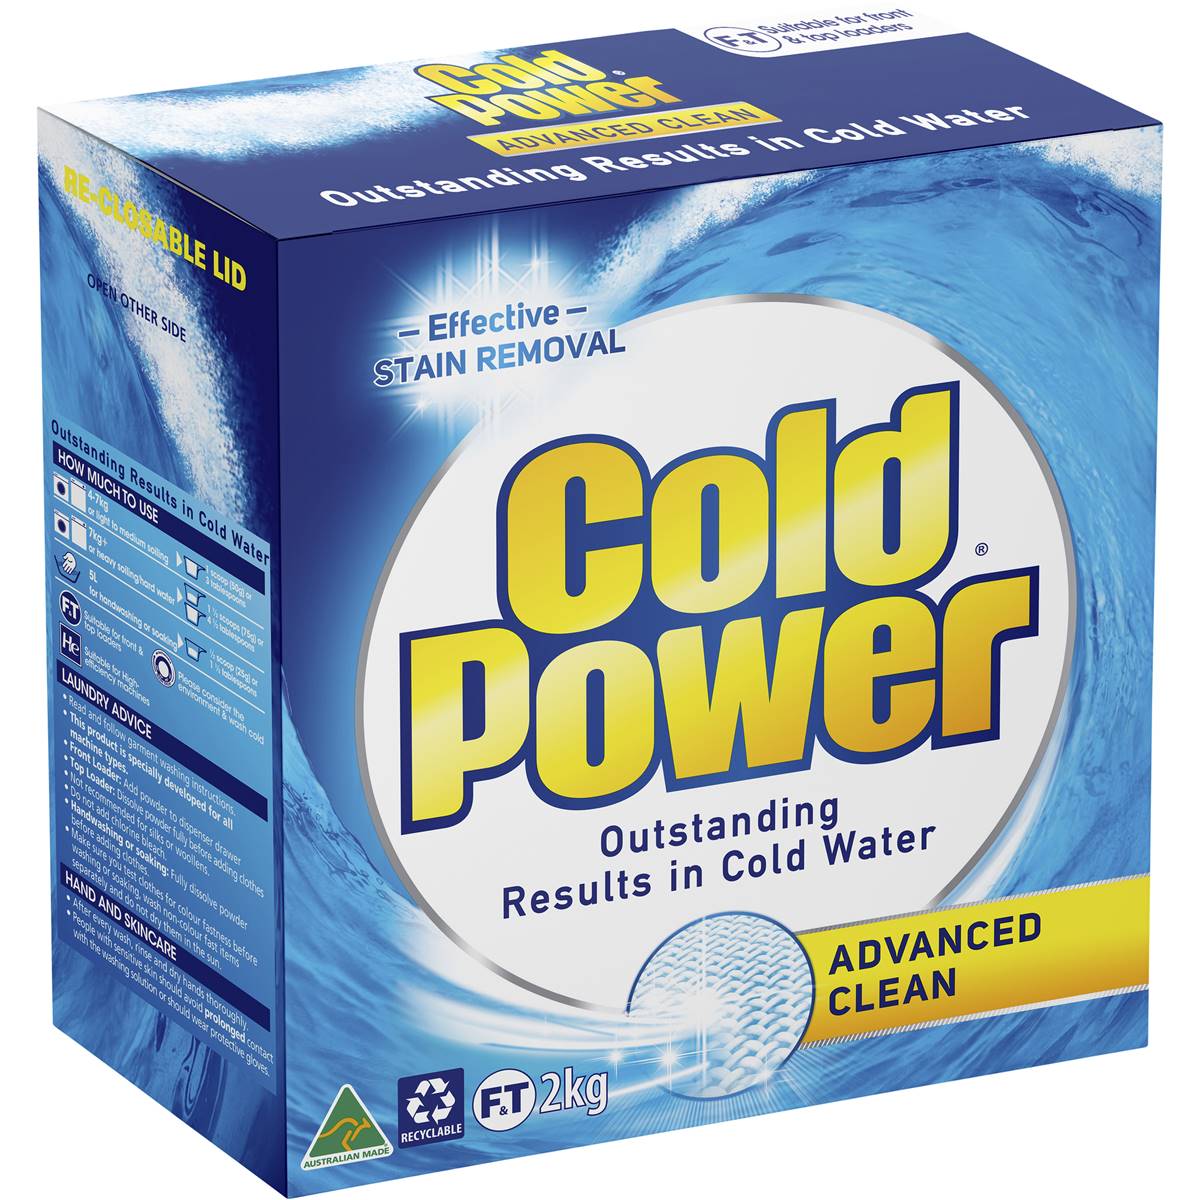 Cold Power Advanced Clean Laundry Powder 2kg